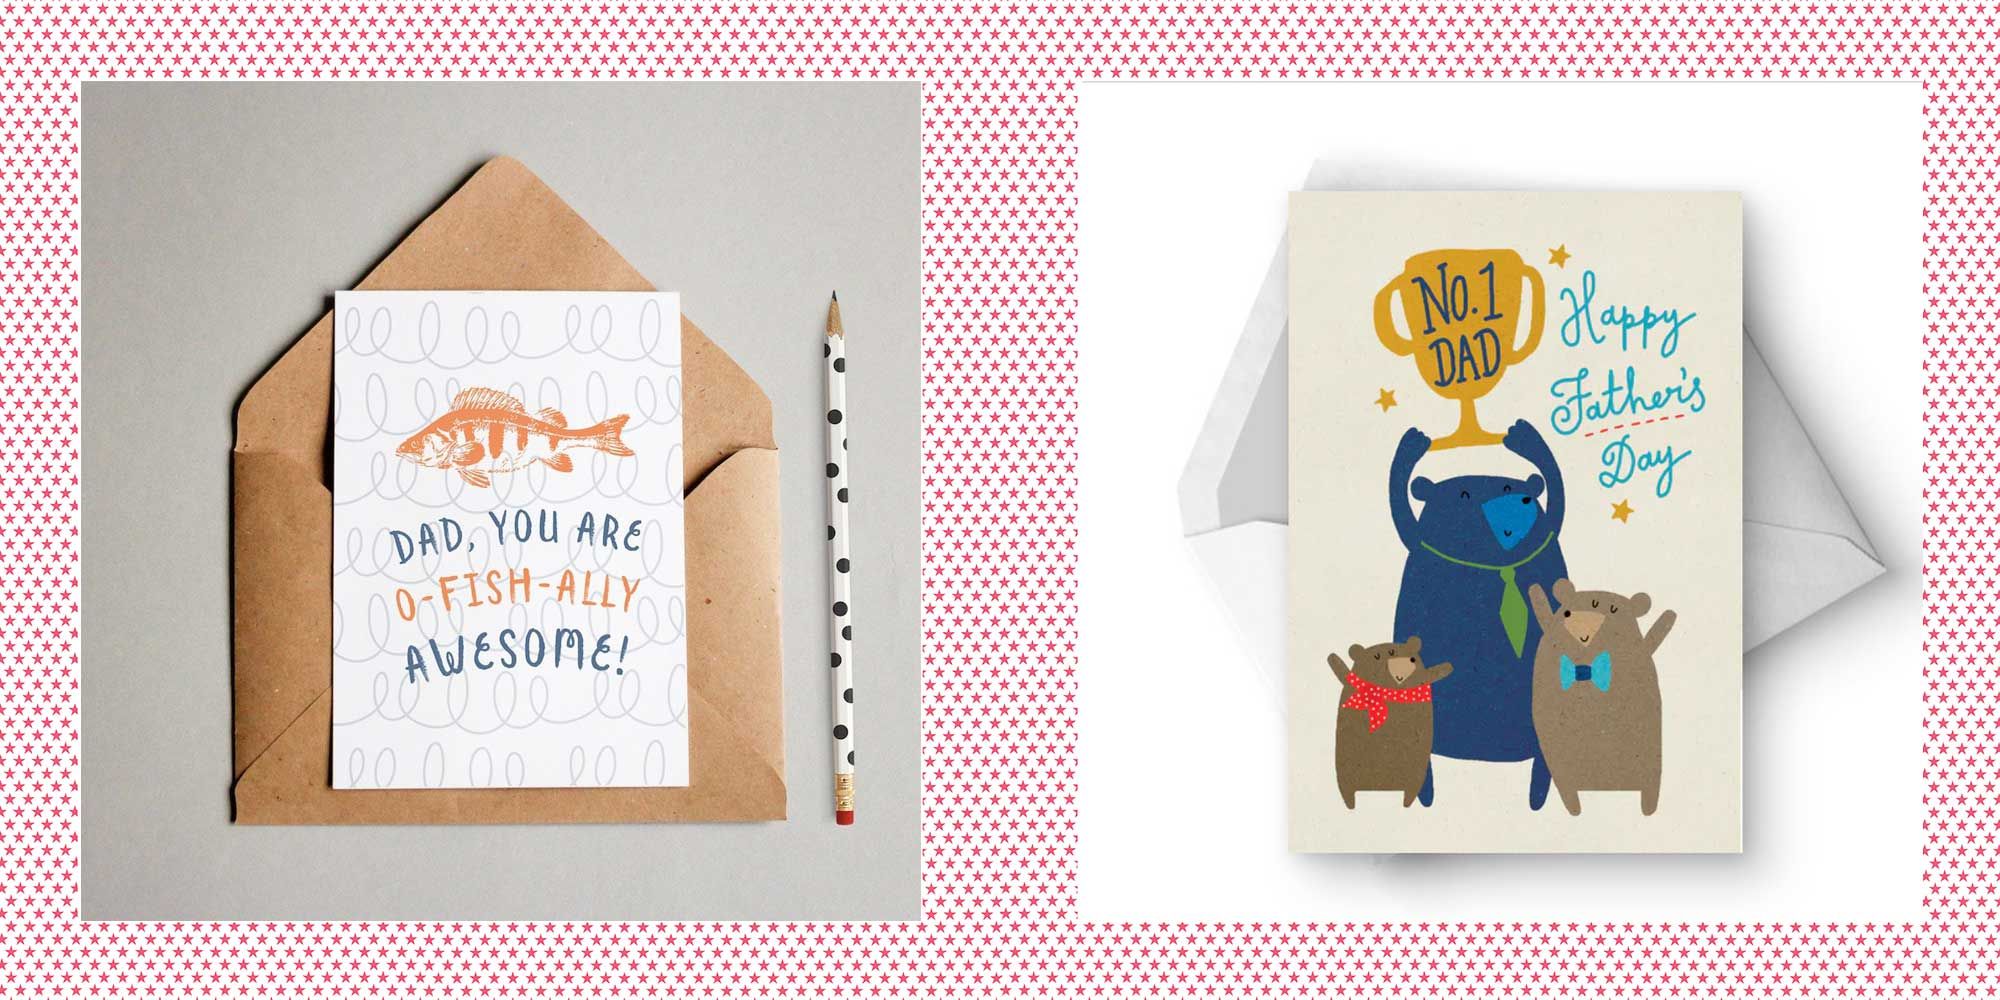 Simple Birthday Card for Kids to Make- free printable - Raise